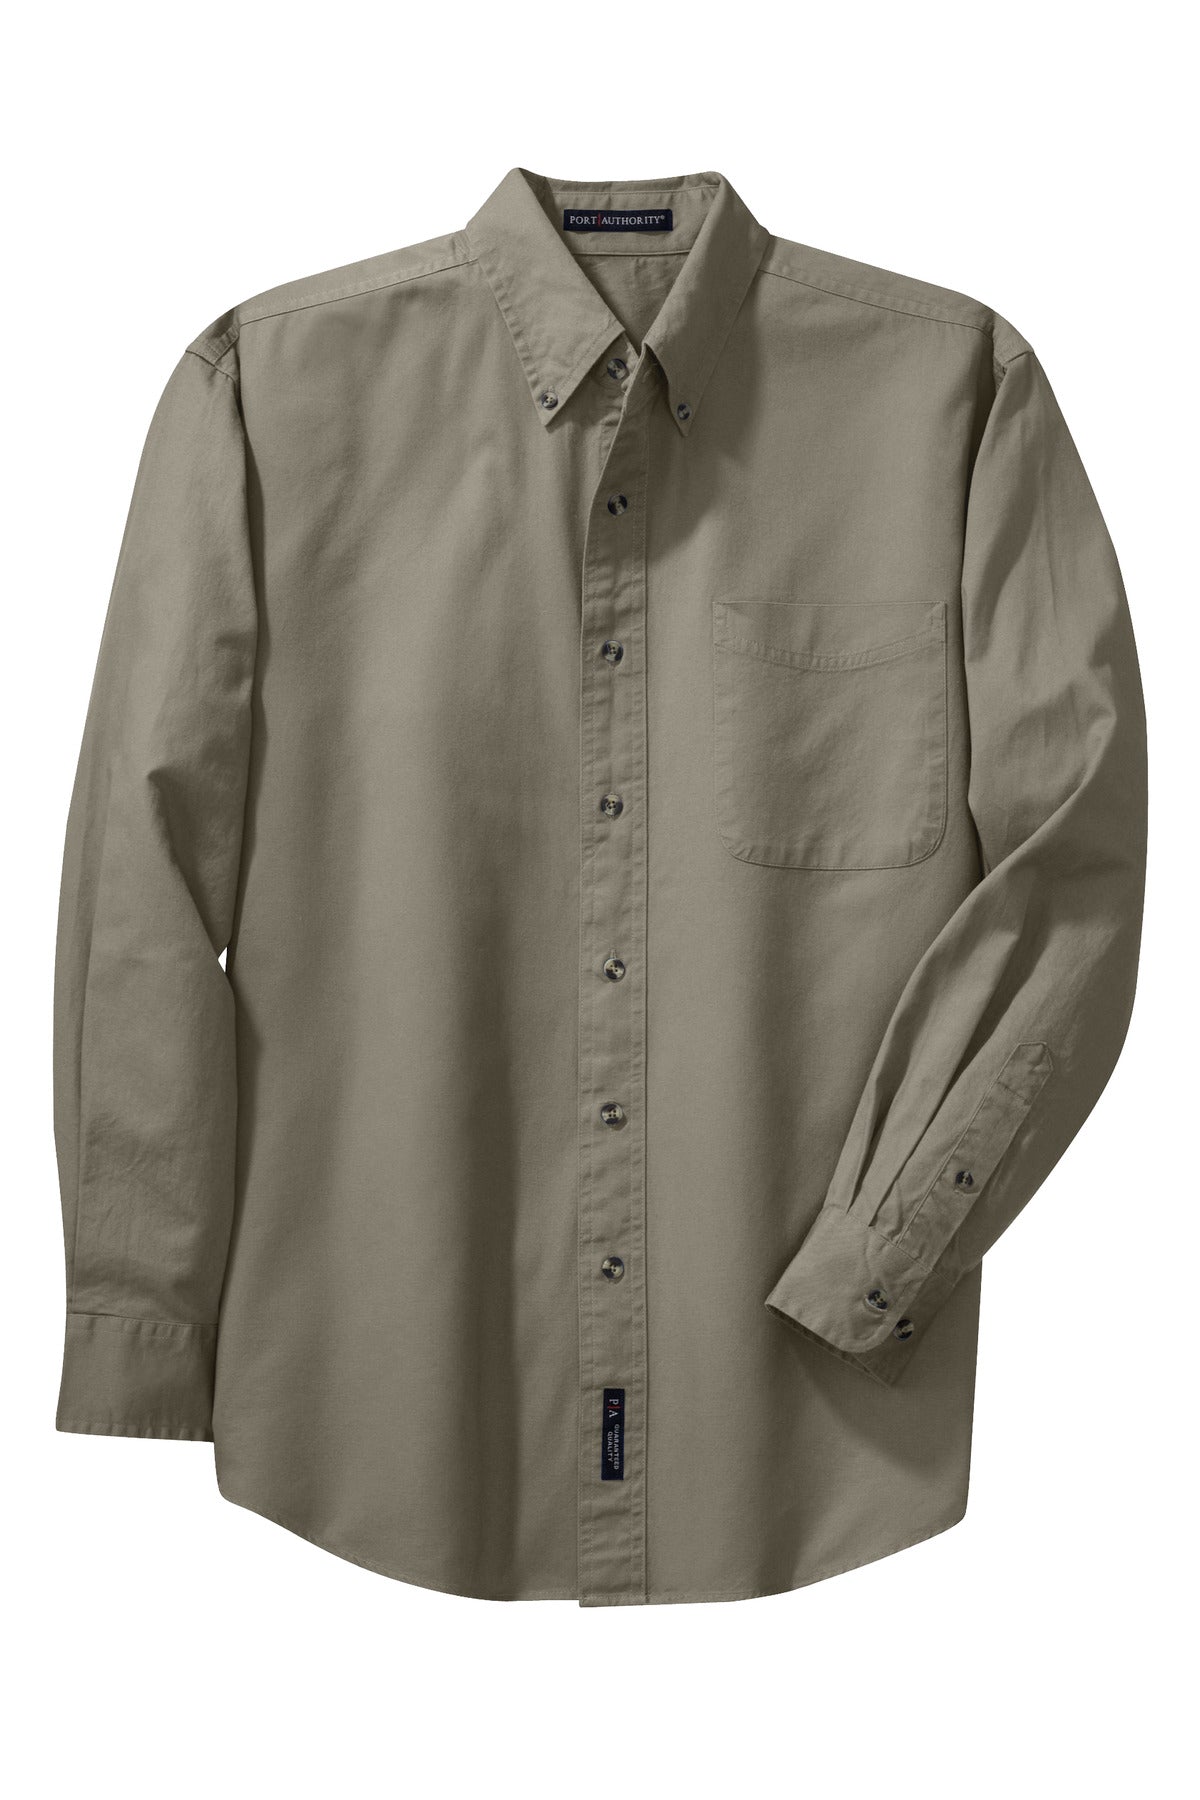 Port Authority Tall Long Sleeve Twill Shirt. TLS600T